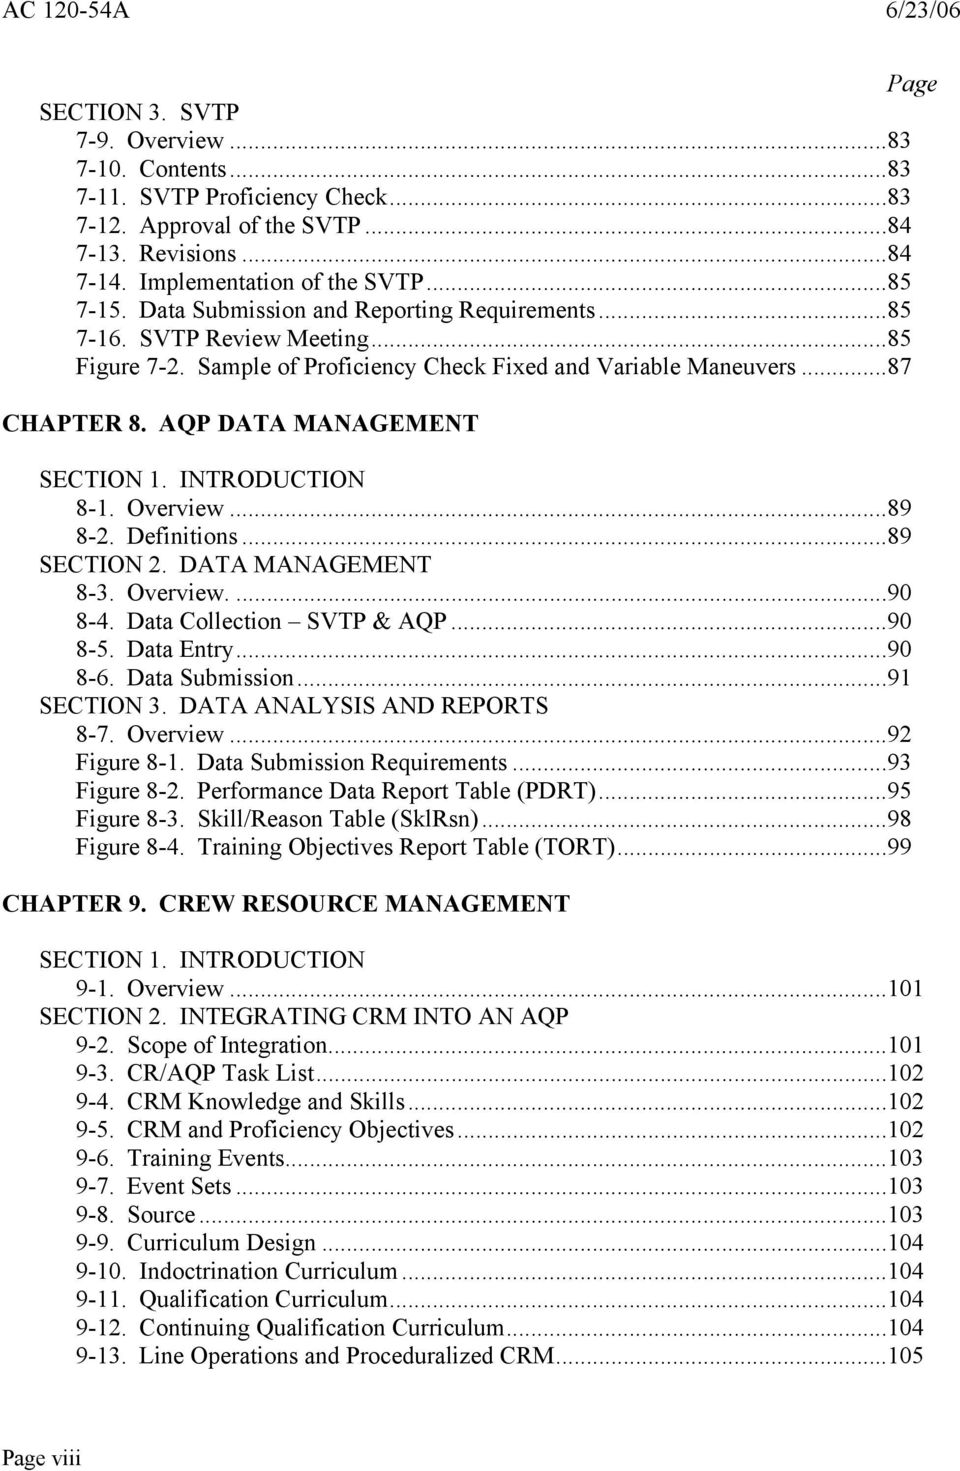 AQP DATA MANAGEMENT SECTION 1. INTRODUCTION 8-1. Overview...89 8-2. Definitions...89 SECTION 2. DATA MANAGEMENT 8-3. Overview....90 8-4. Data Collection SVTP & AQP...90 8-5. Data Entry...90 8-6.